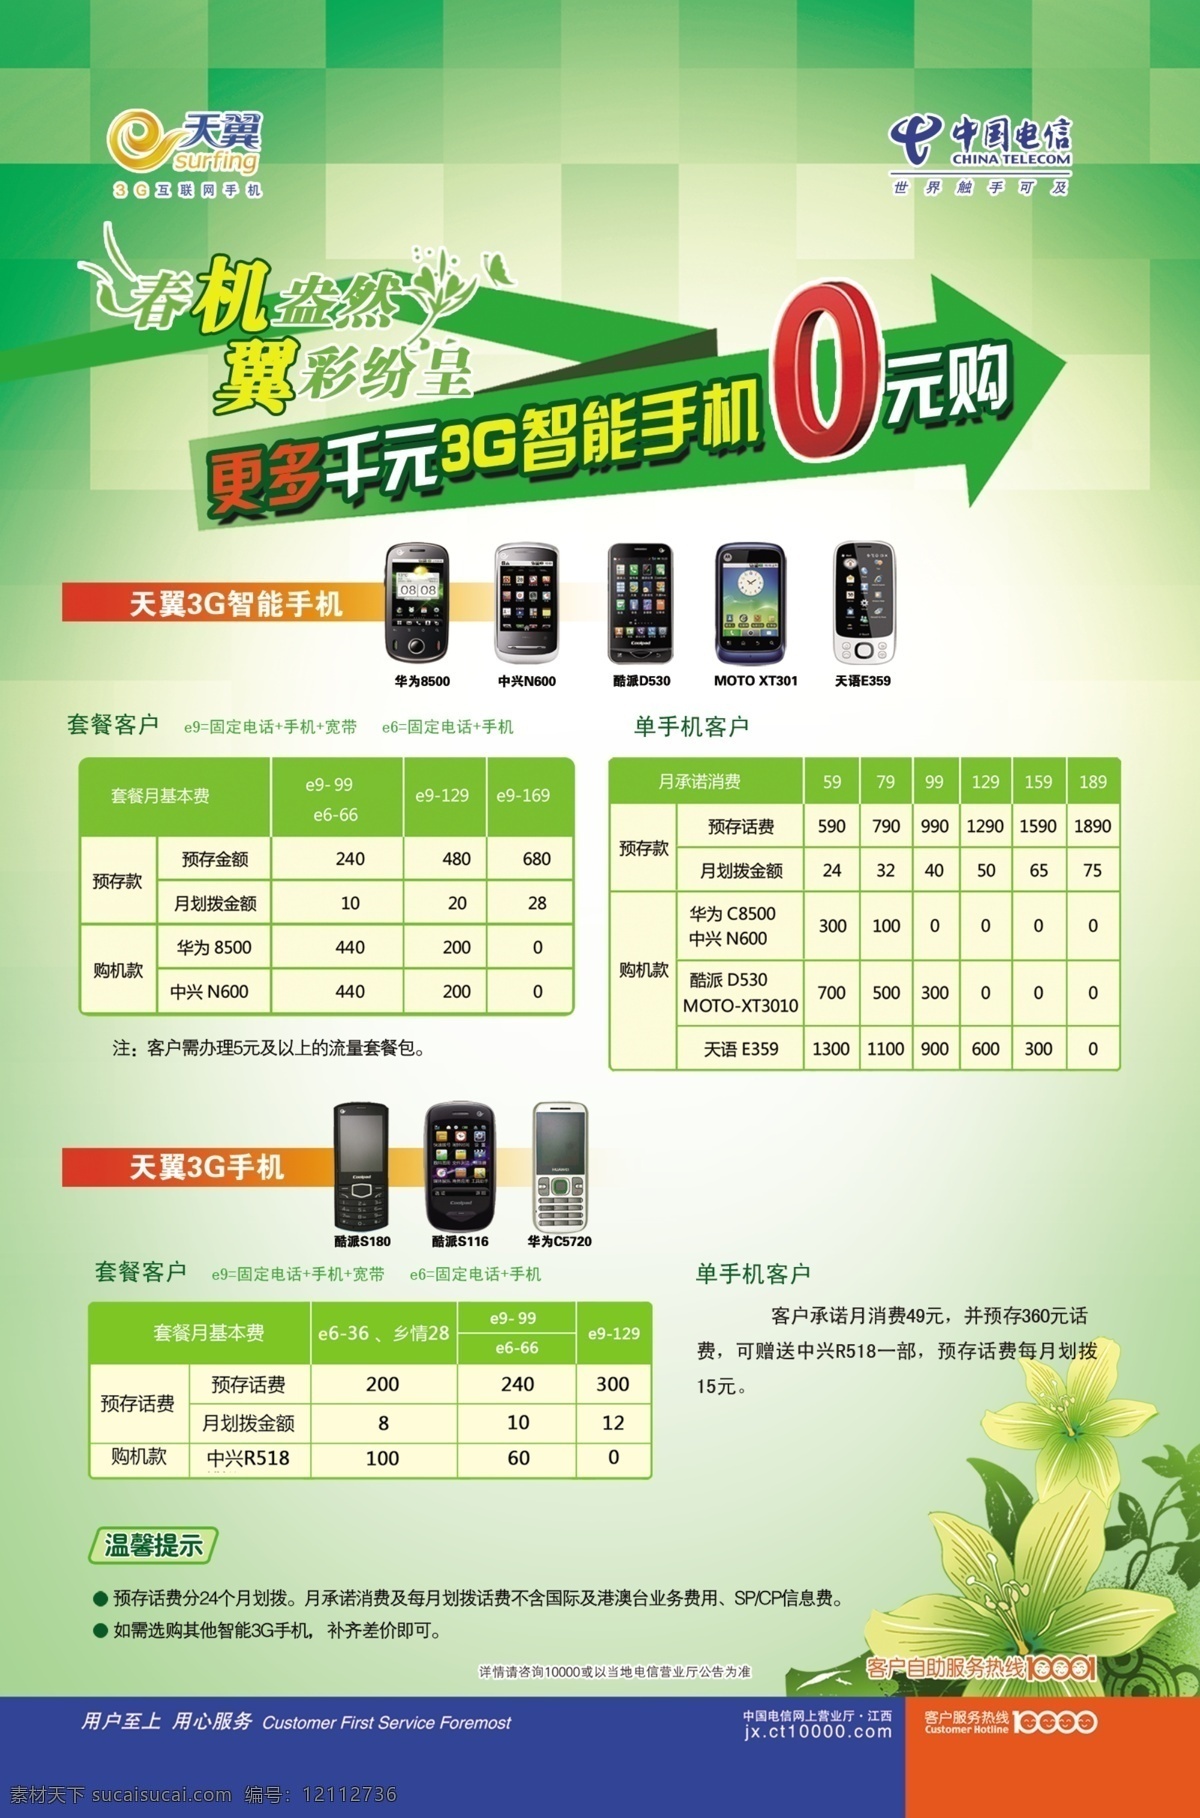 dm宣传单 广告设计模板 三星手机 源文件 中国电信 电信 千 元 3g 智能 手机 购 天翼标 电信兰底条 矢量图 现代科技